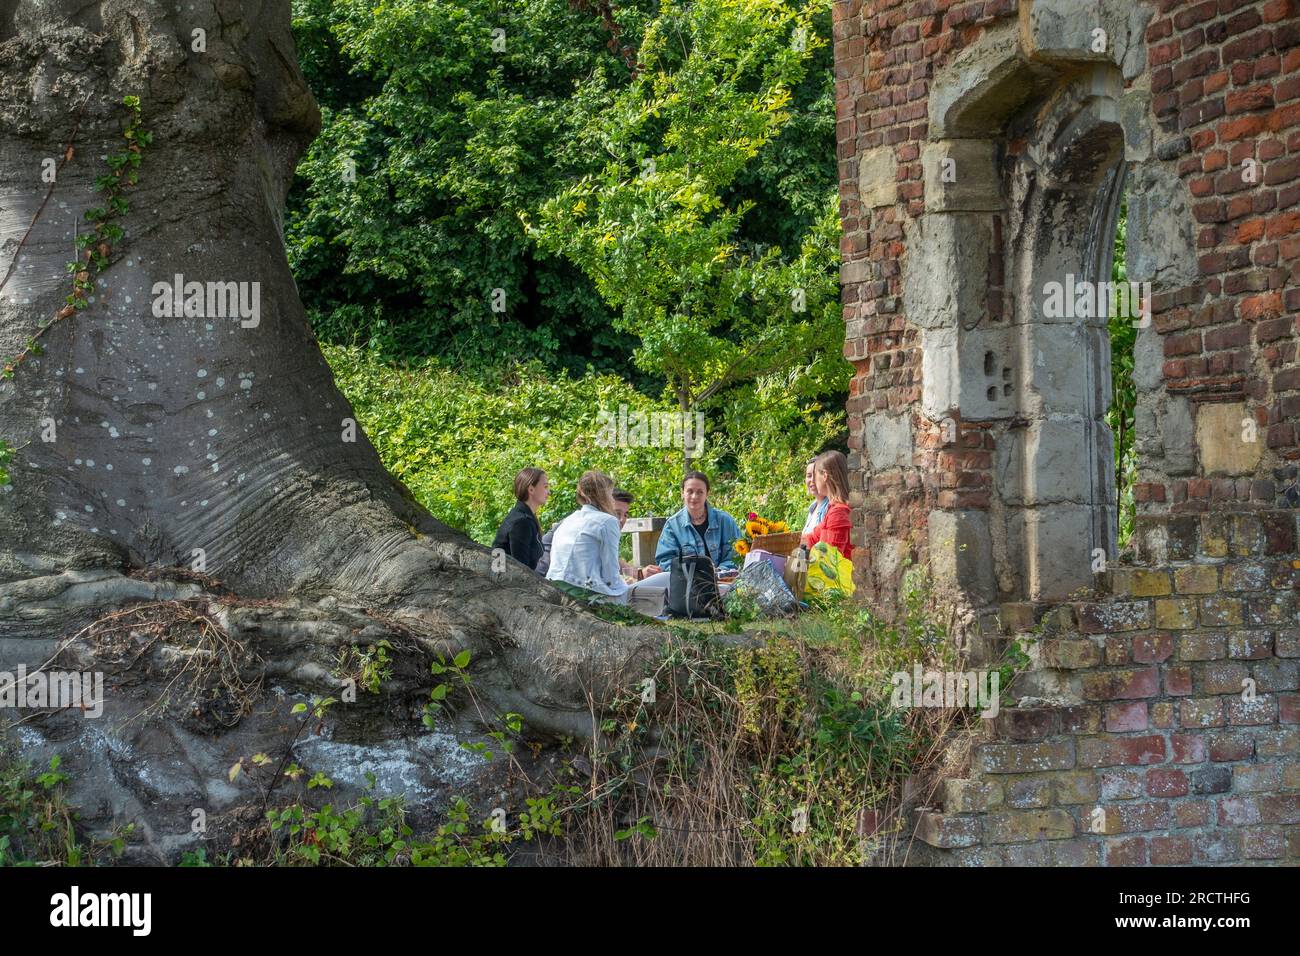 Group,of,Friends,enjoying,Picnic,in,Garden,Large Beech Tree,Ruins,Summer Stock Photo